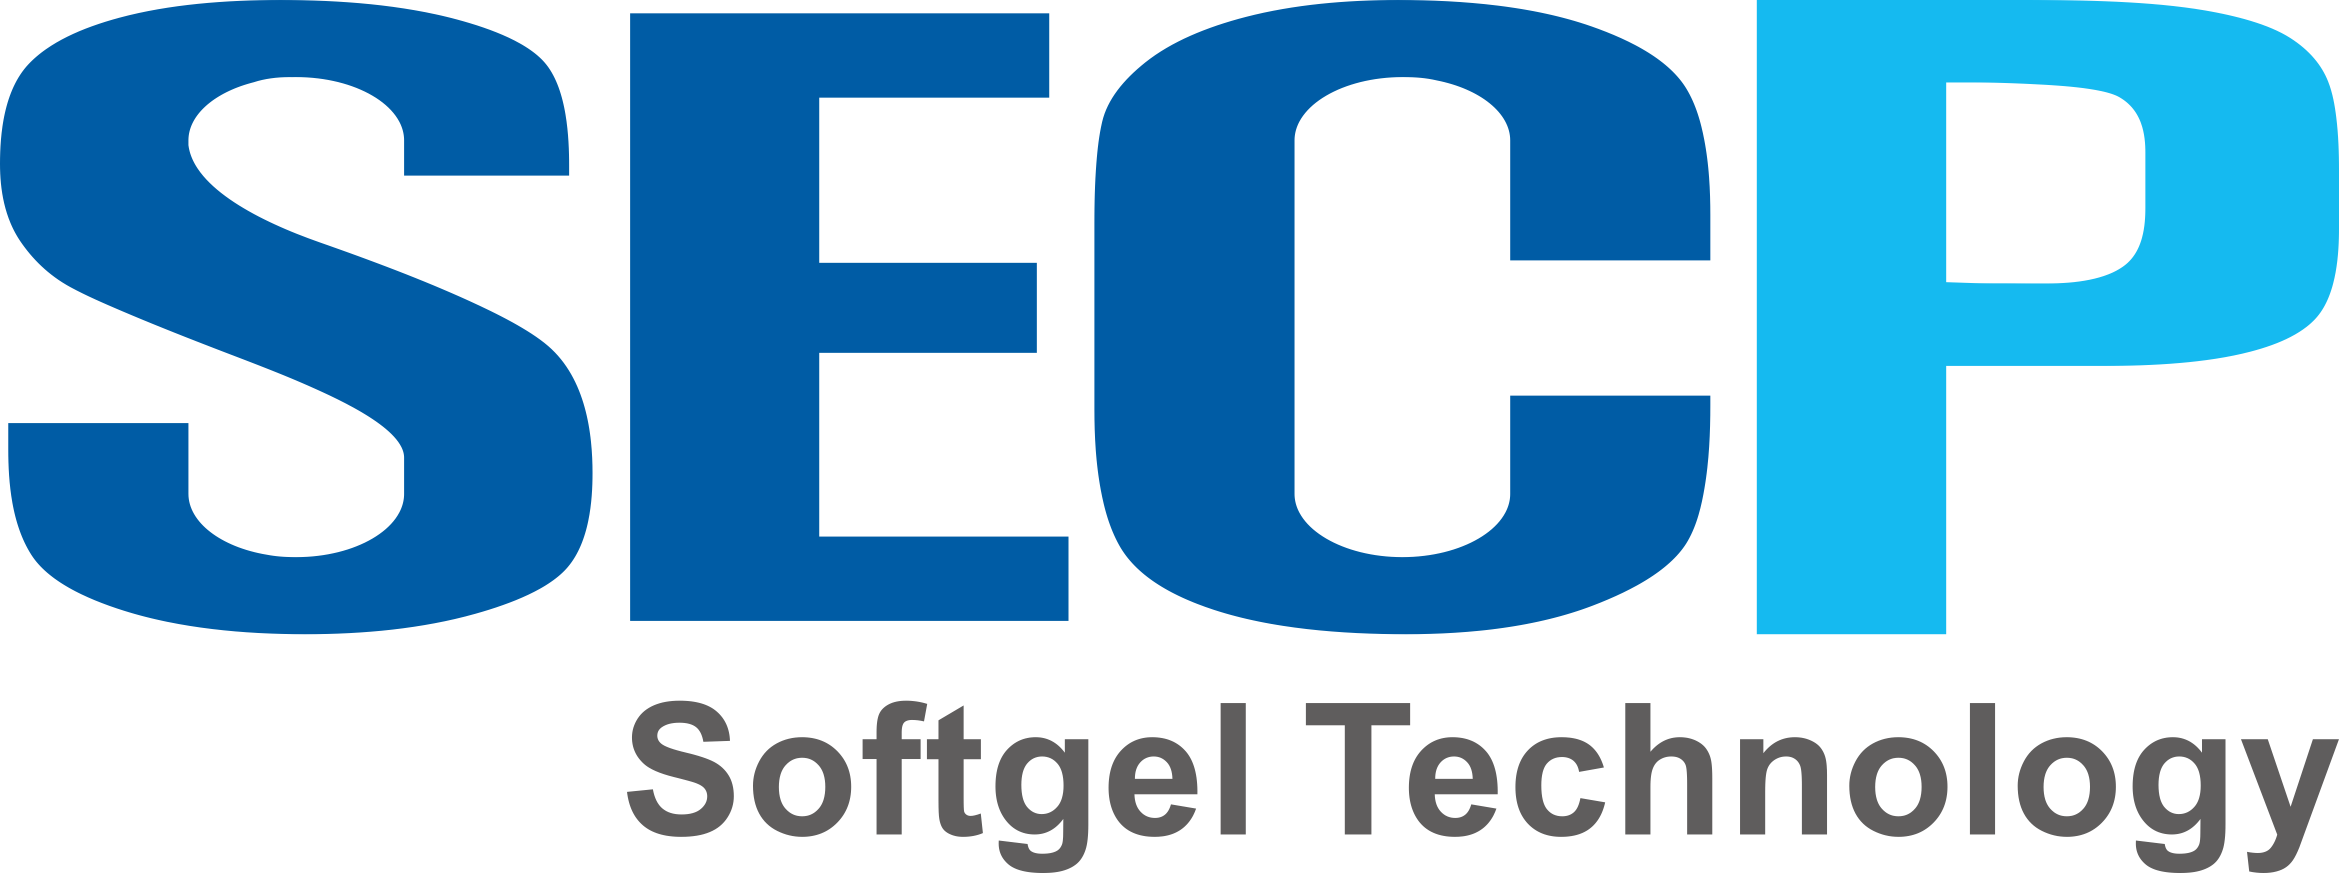 SEC Softgel Technology Limited